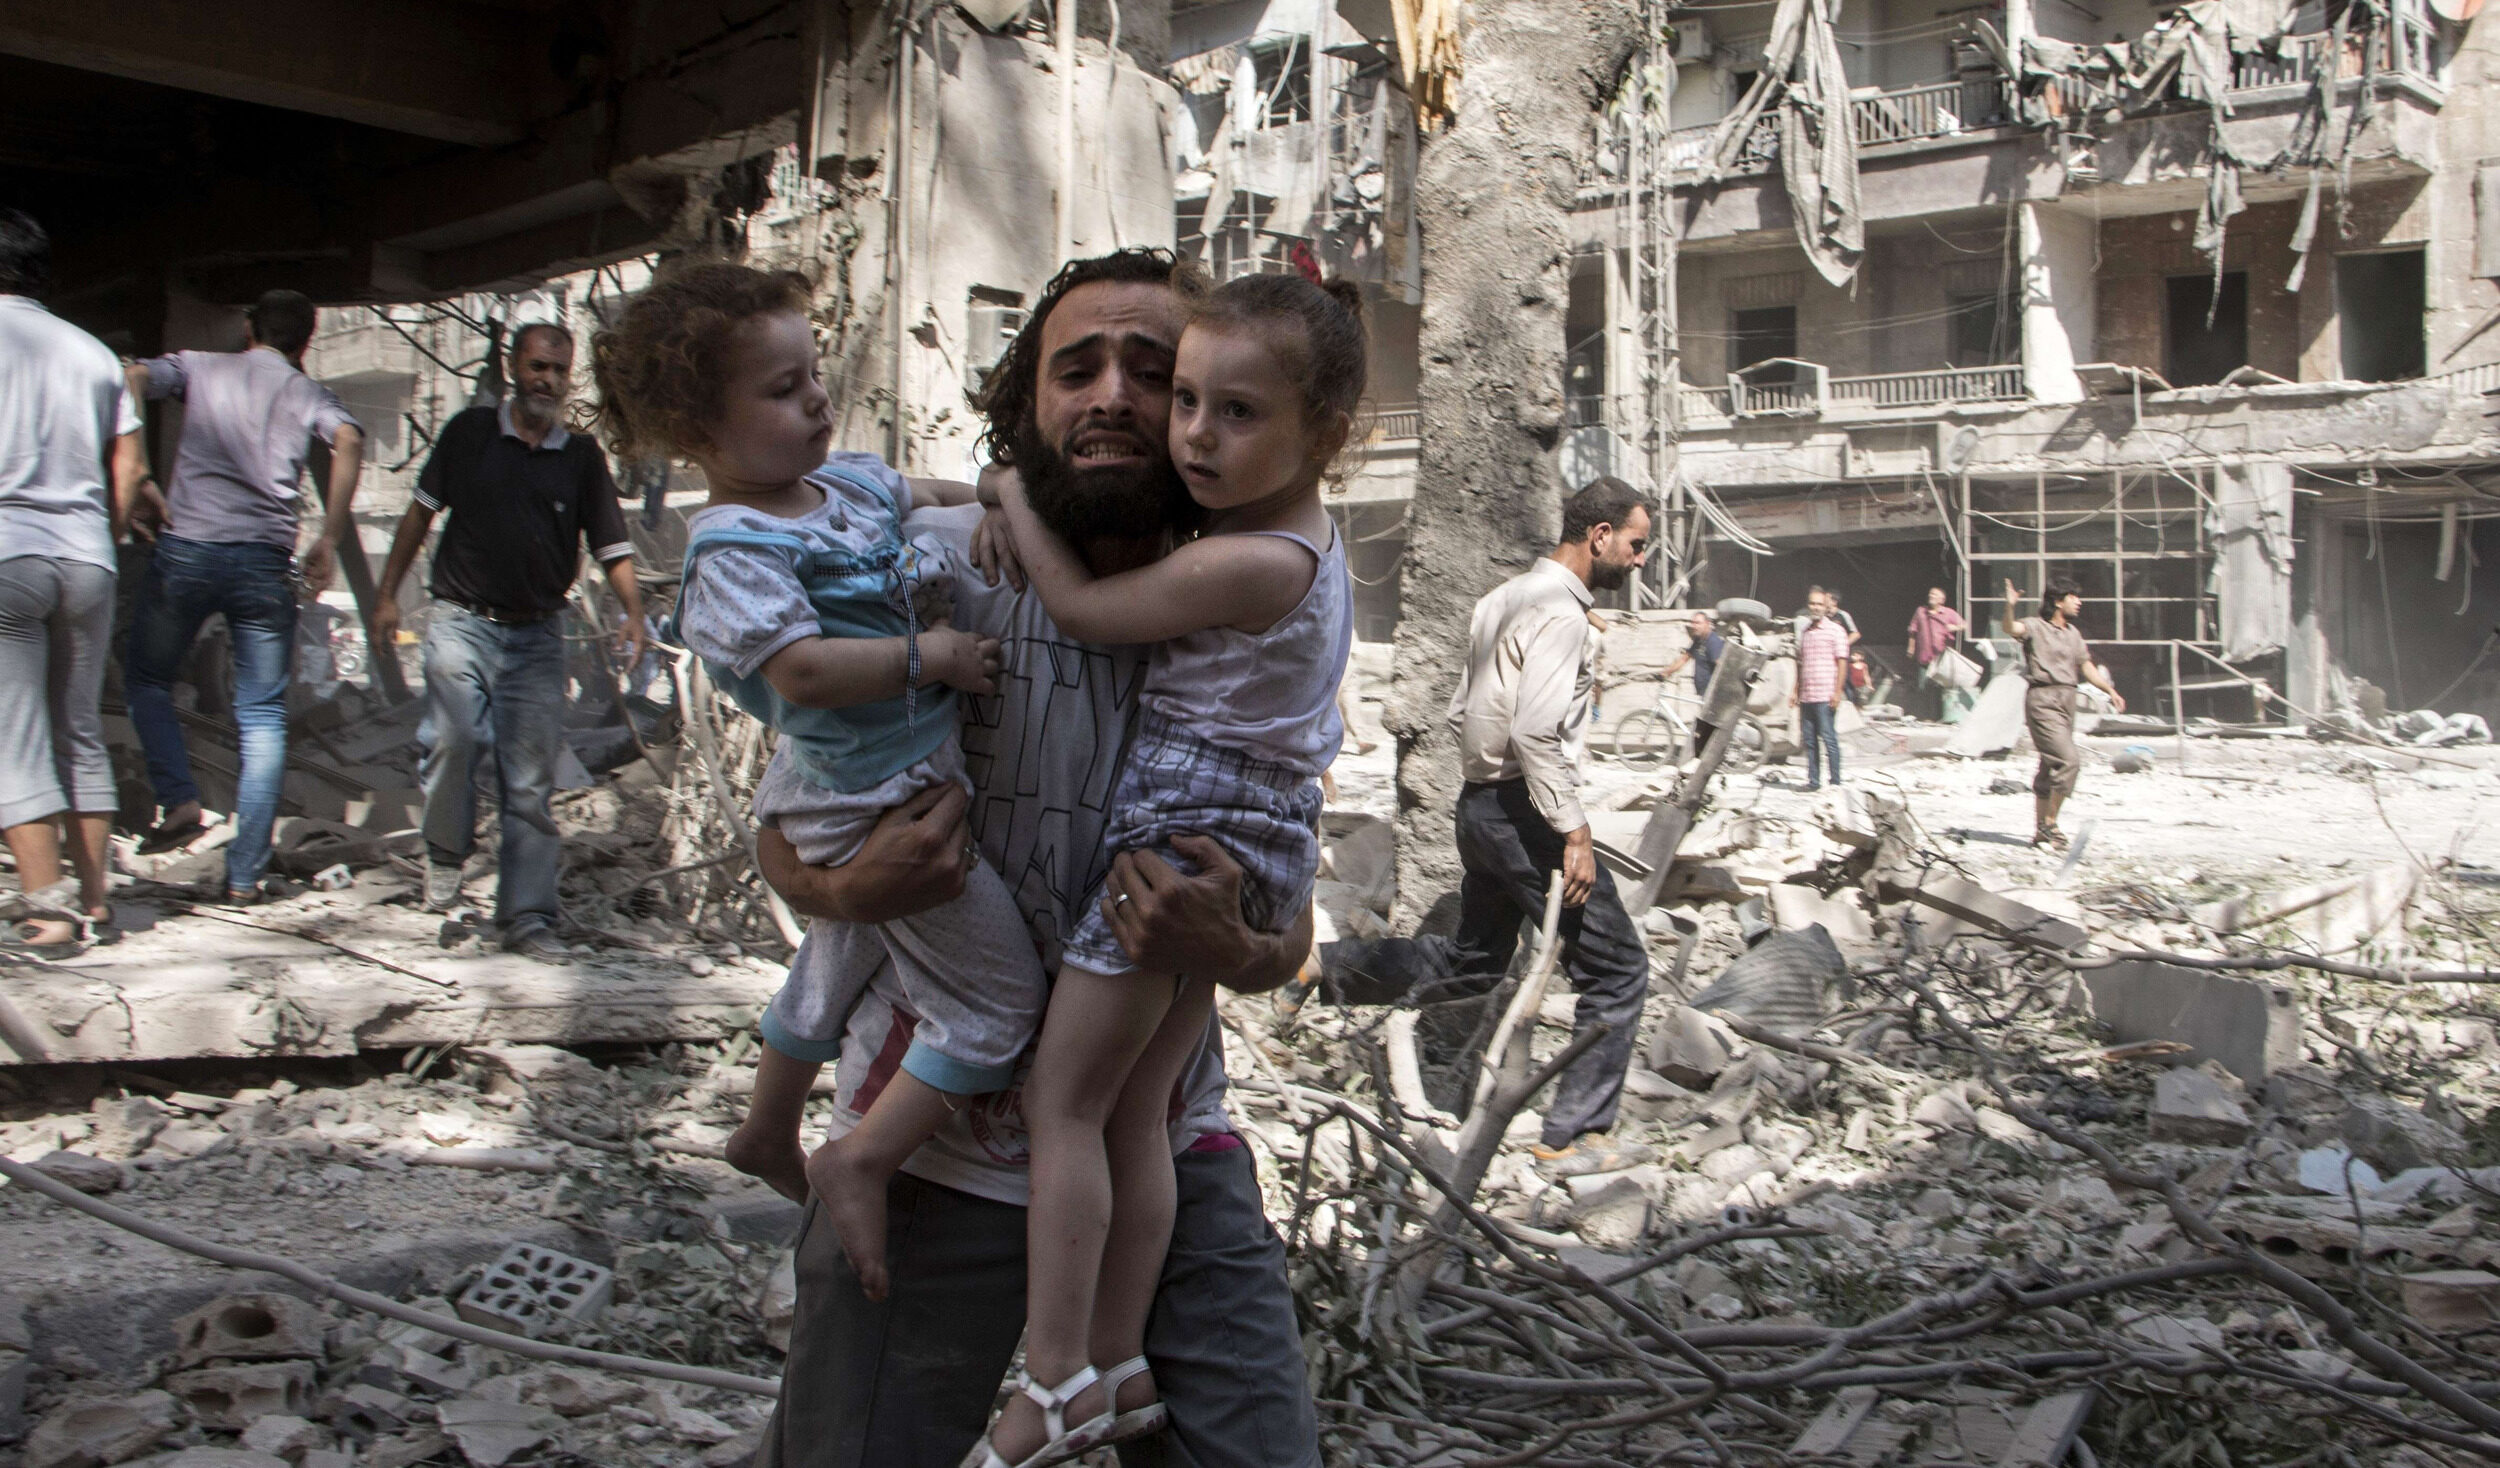 Siria devastata, Siria tradita